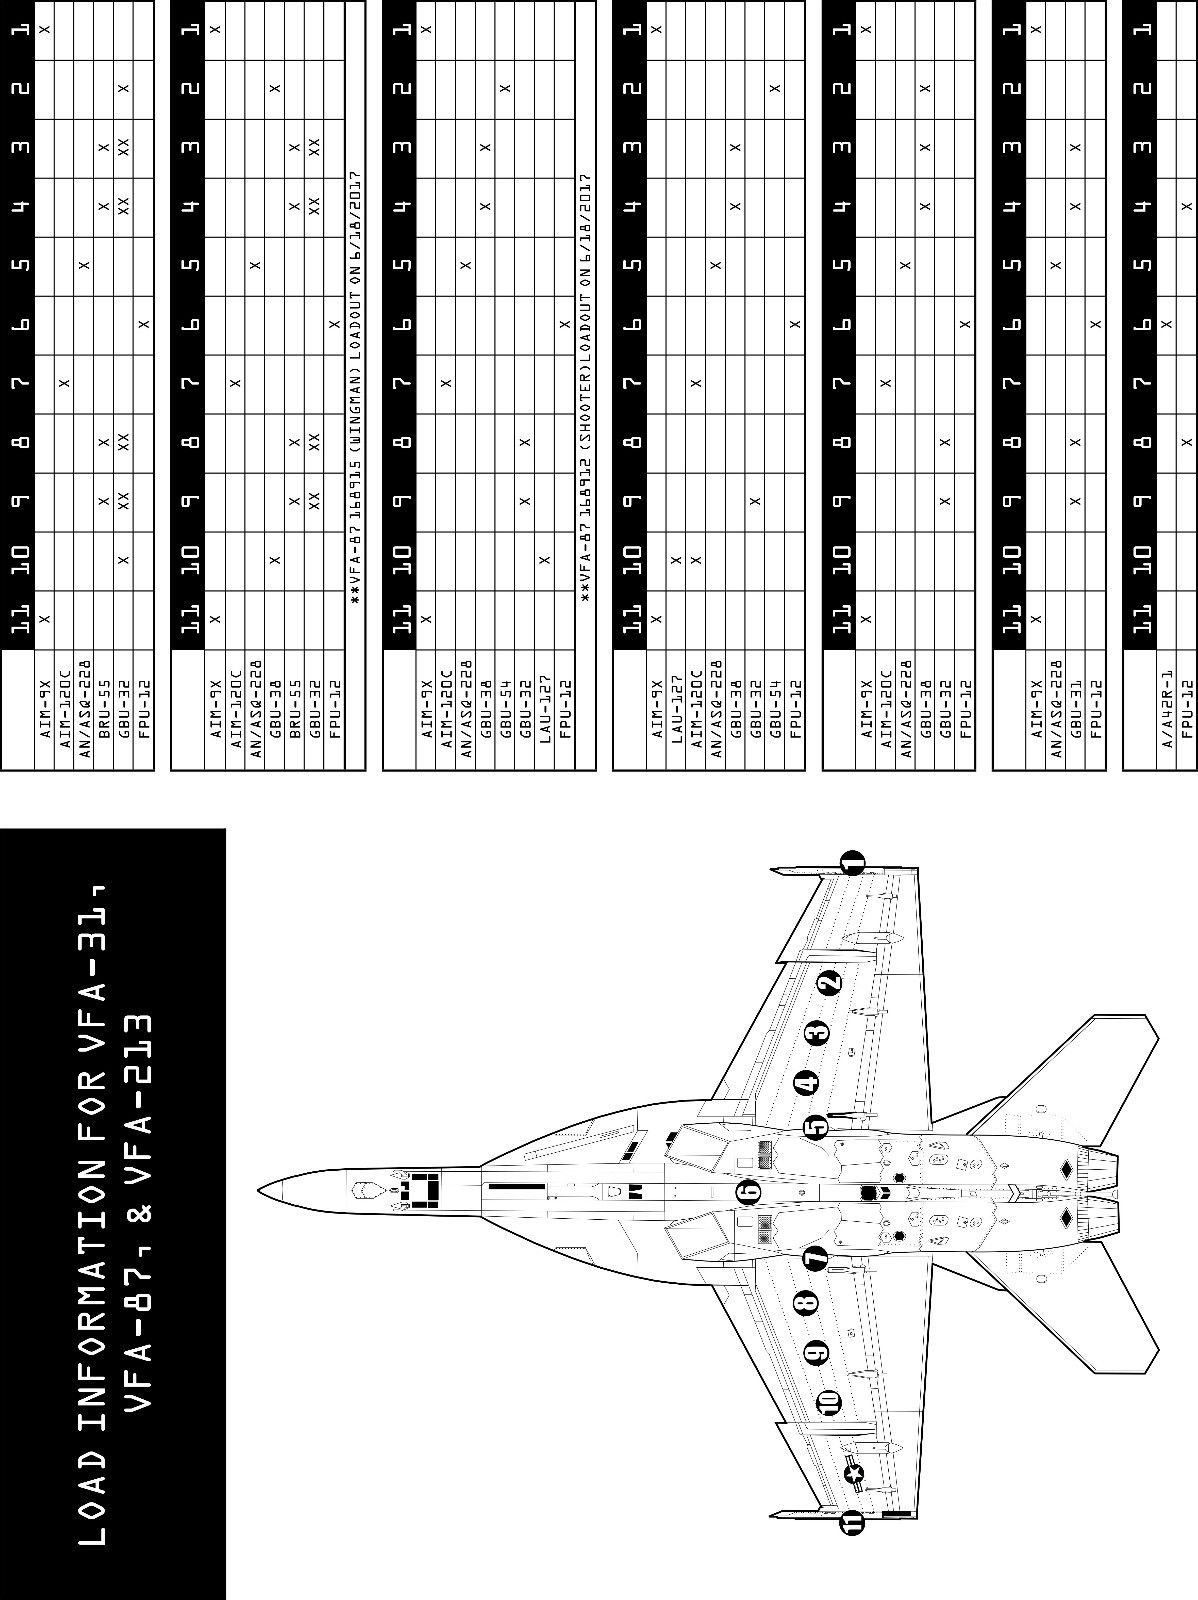 1/48 F/A-18C/E/F, EA-18G 第8航空联队作战飞机 - 点击图像关闭